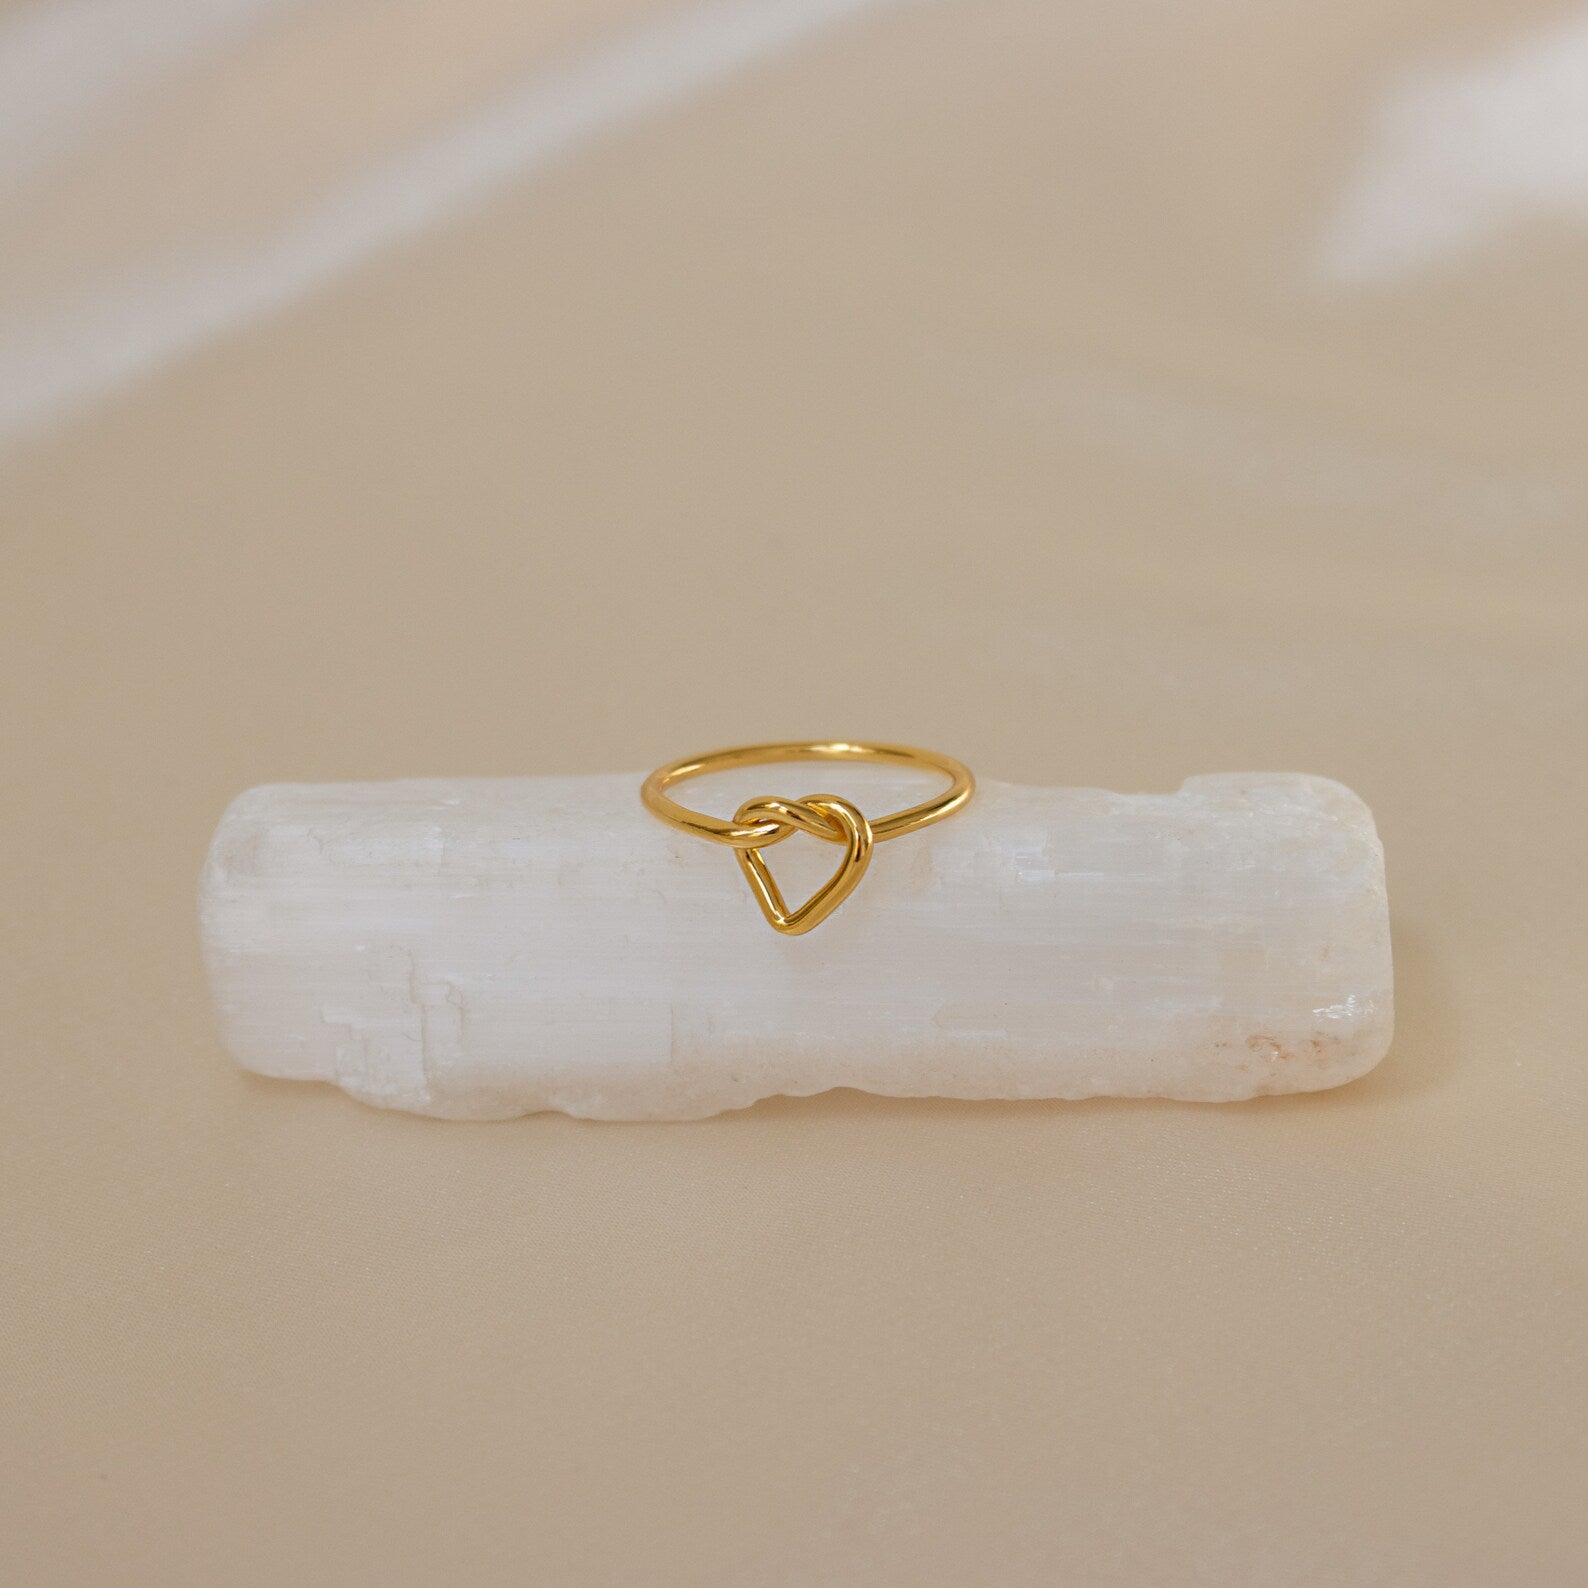 Adjustable golden heart ring - OMYOKI artisanal jewelry